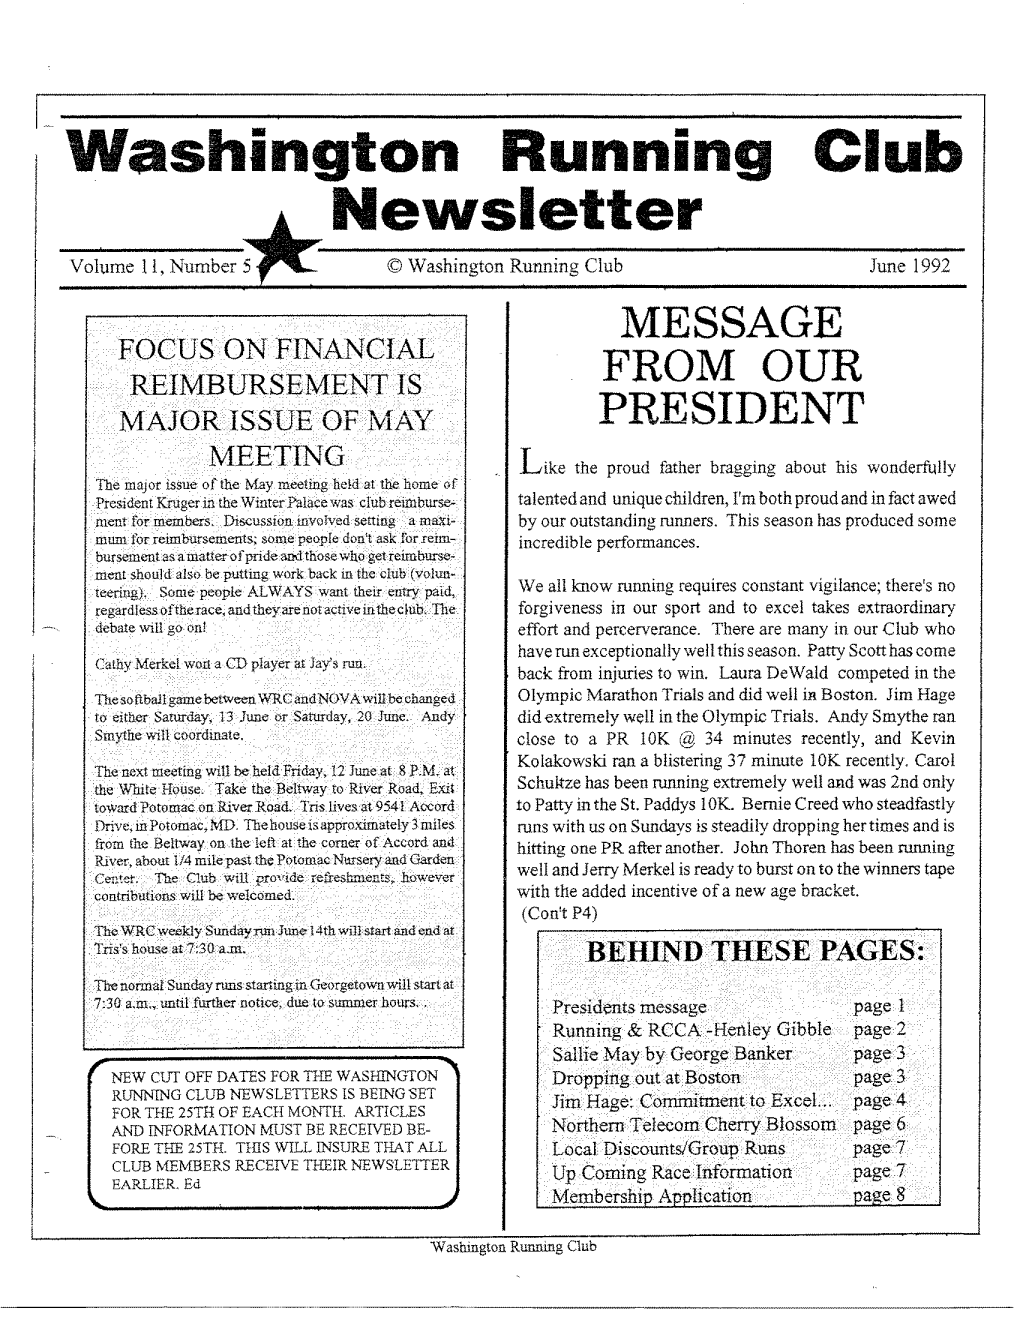 Washington Running Newsletter Club